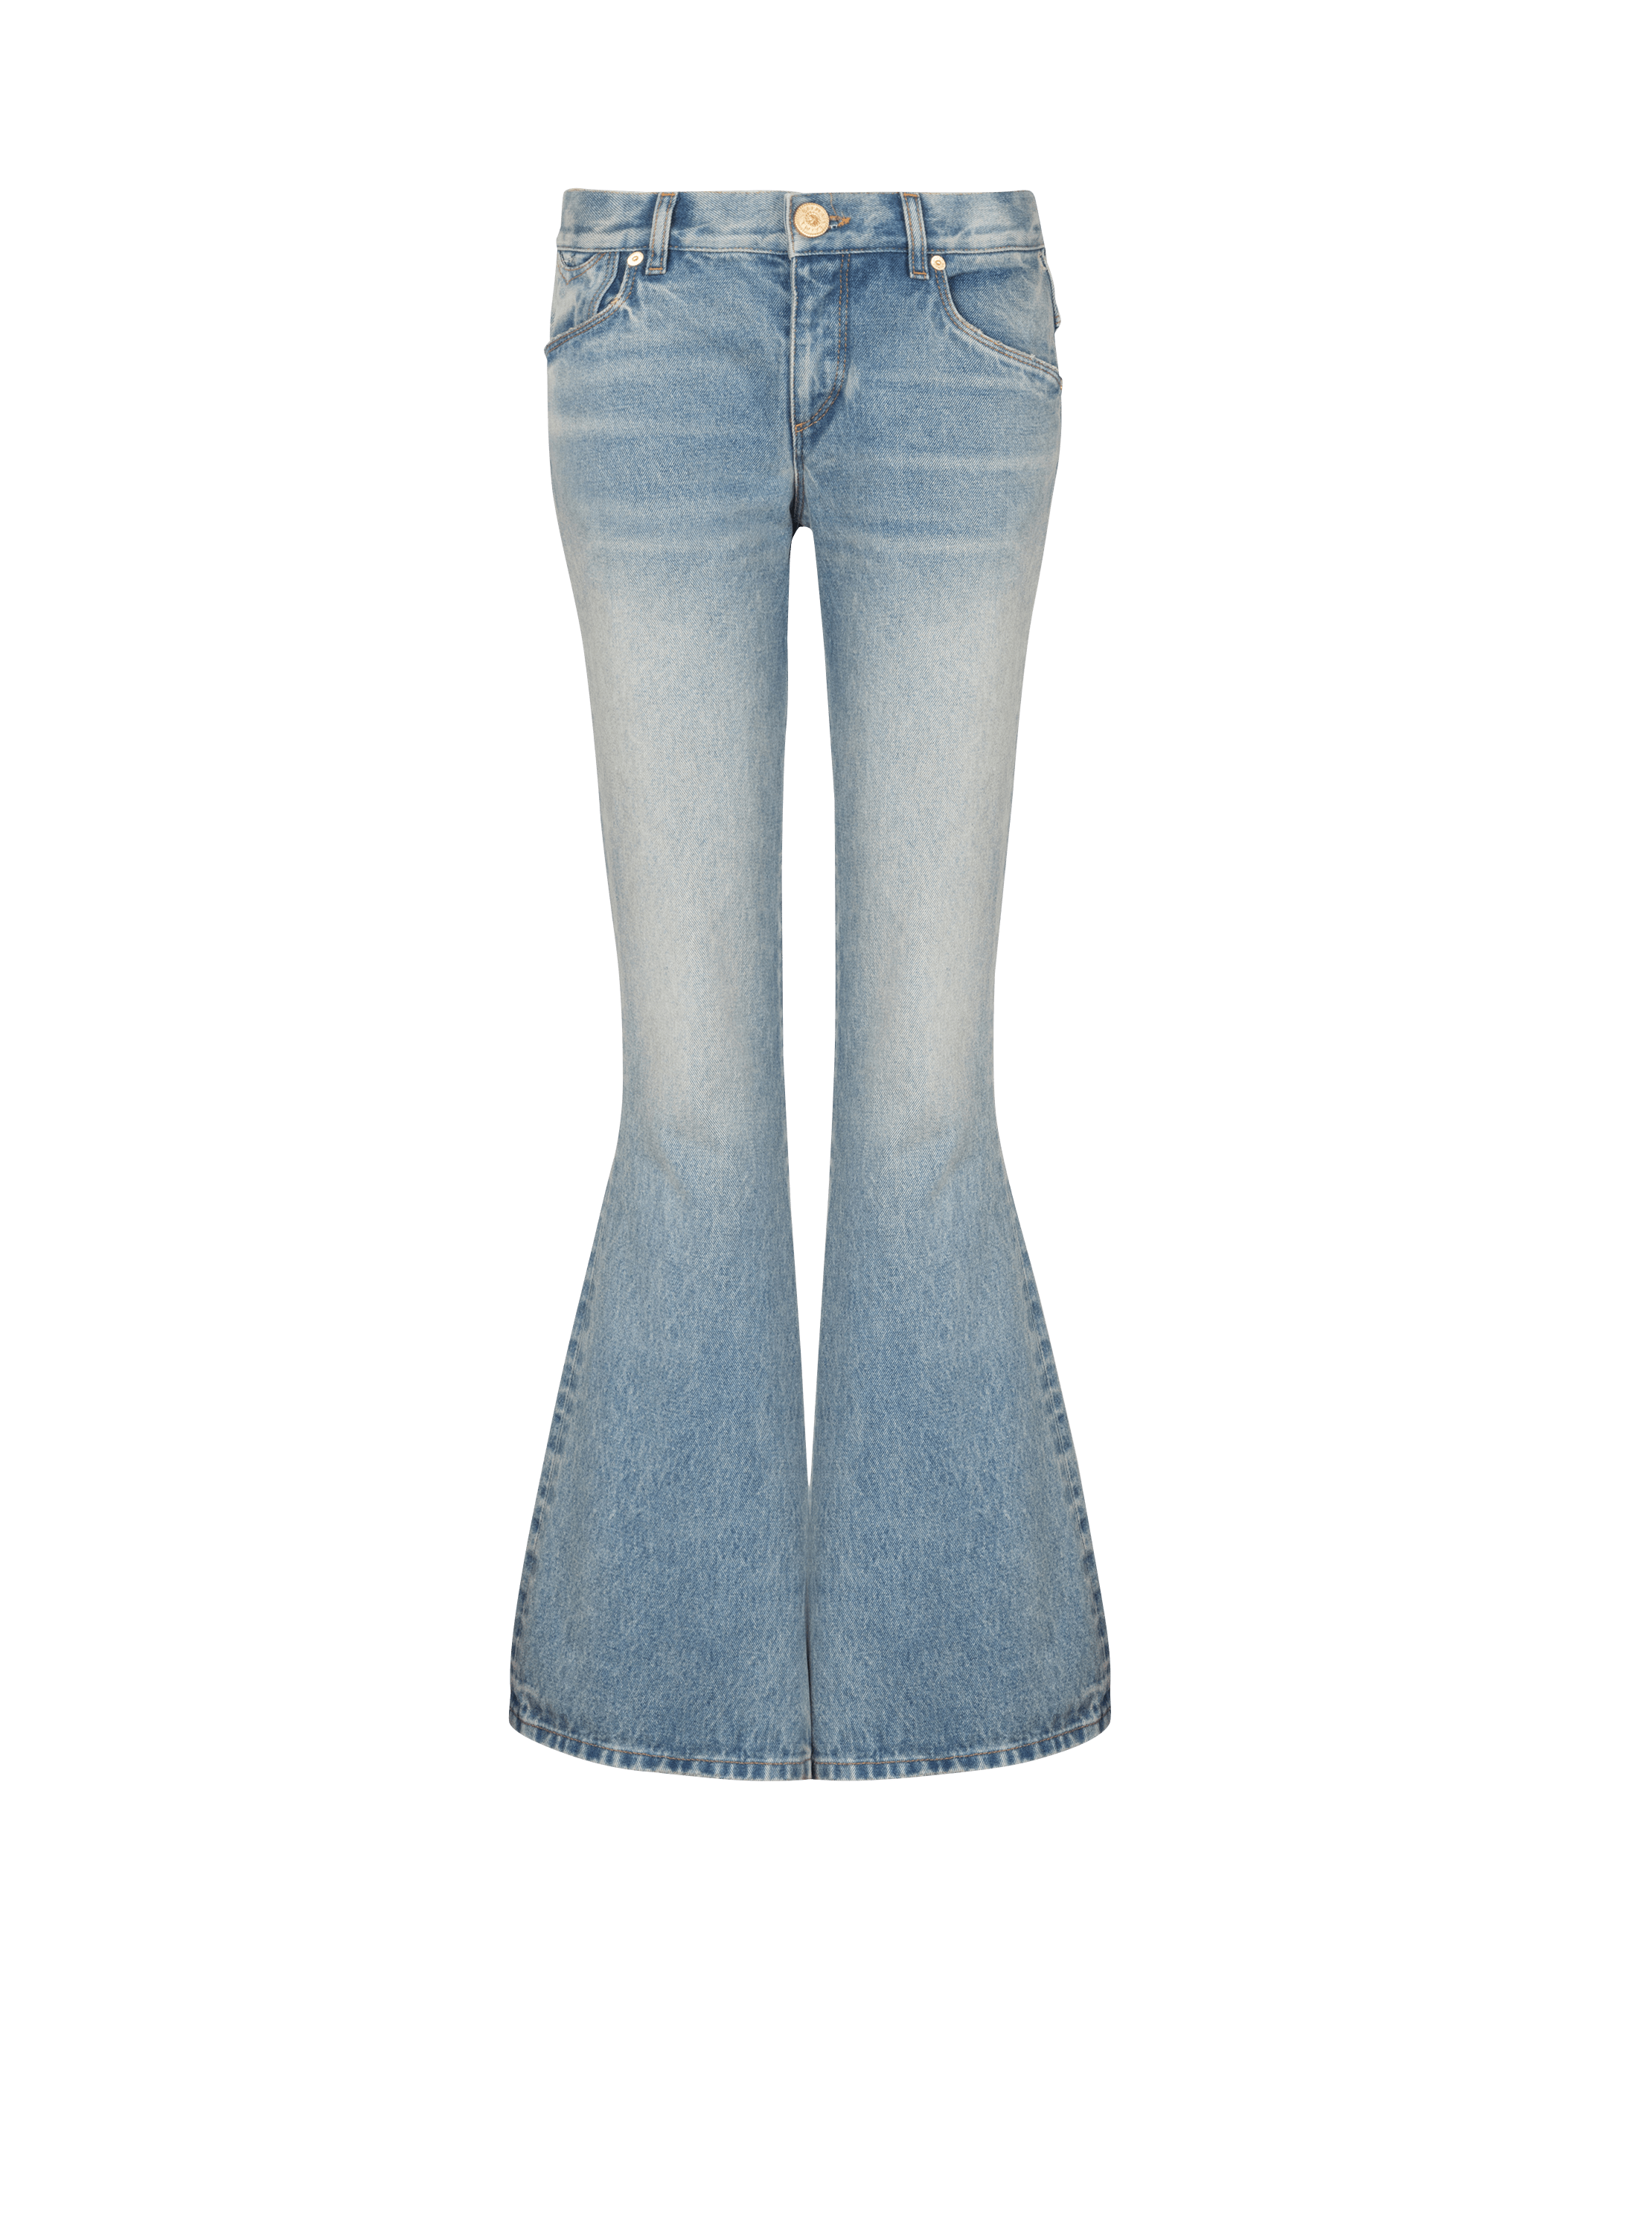 Western bootcut denim jeans